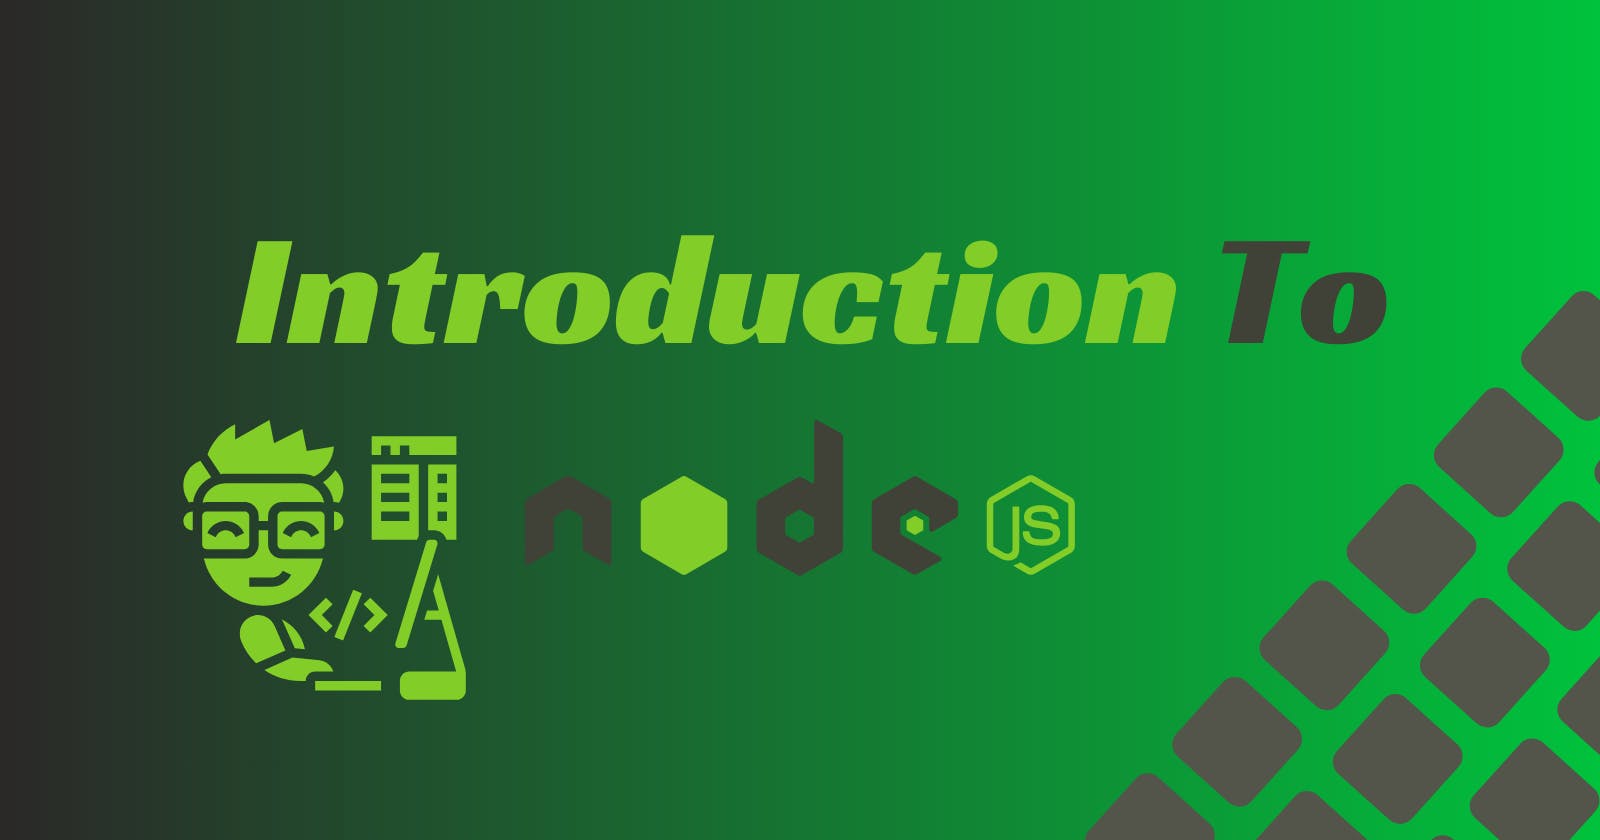 Introduction to node.js